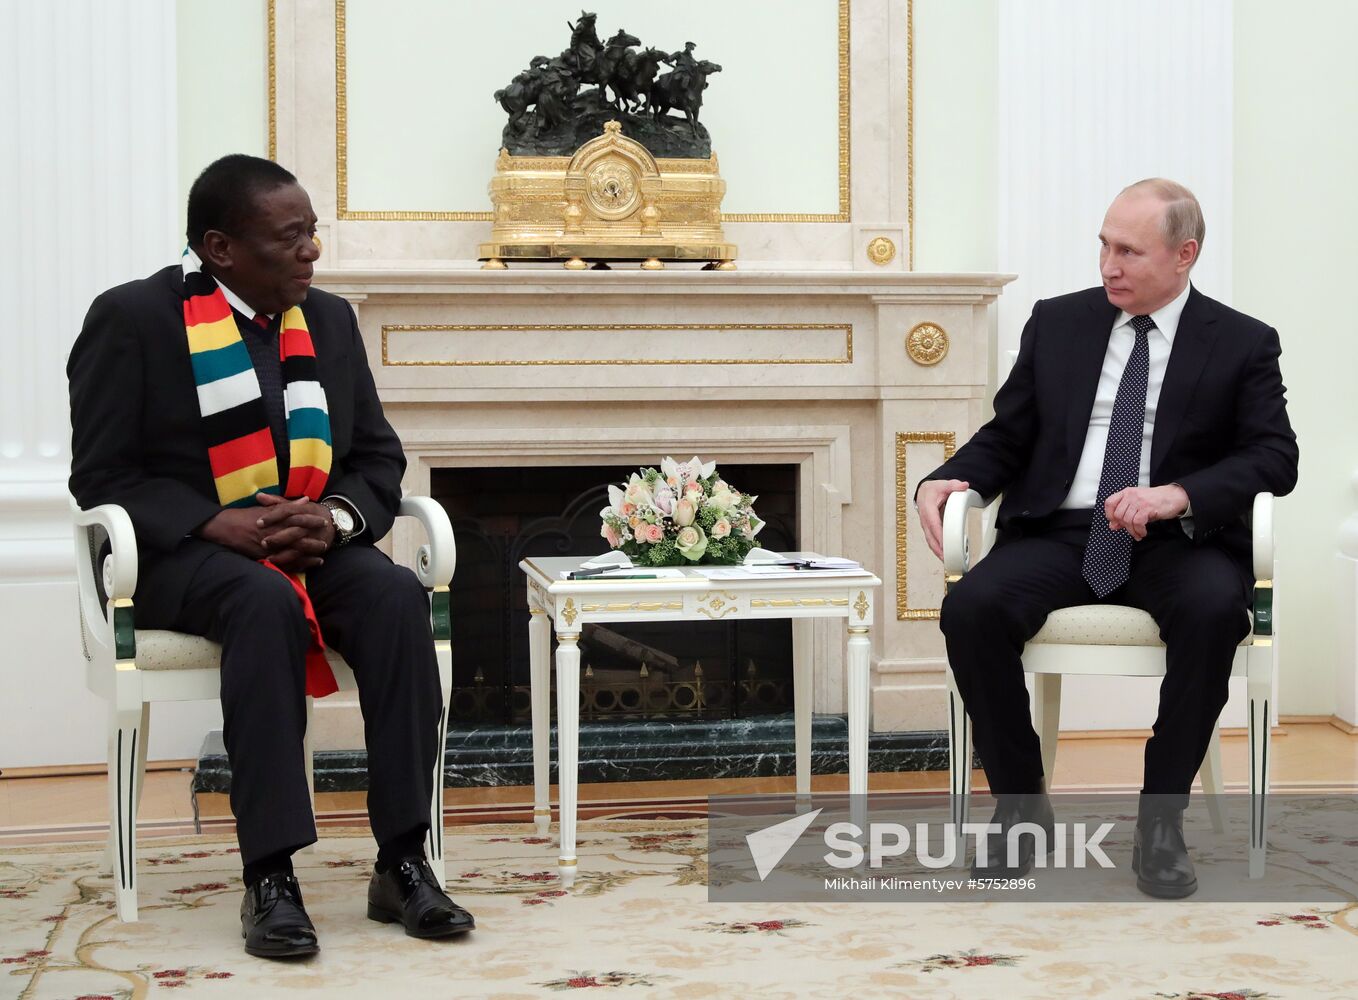 President Vladimir Putin meets with President of Zimbabwe Emmerson Mnangagwa